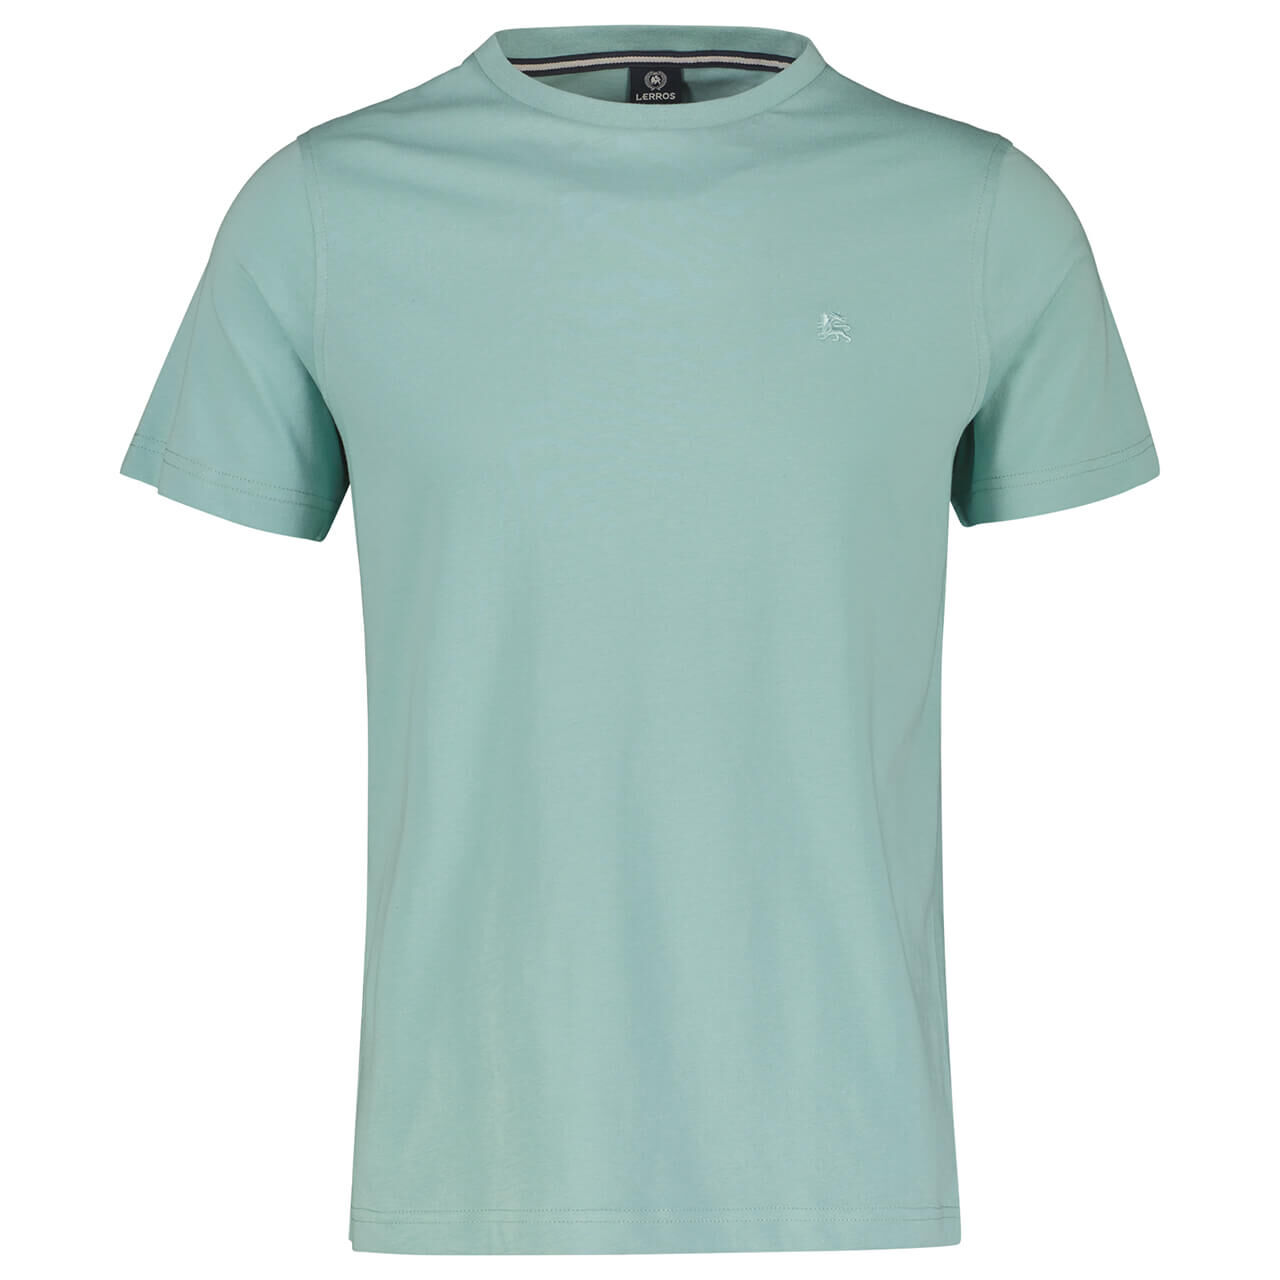 Lerros Herren T-Shirt turquoise green